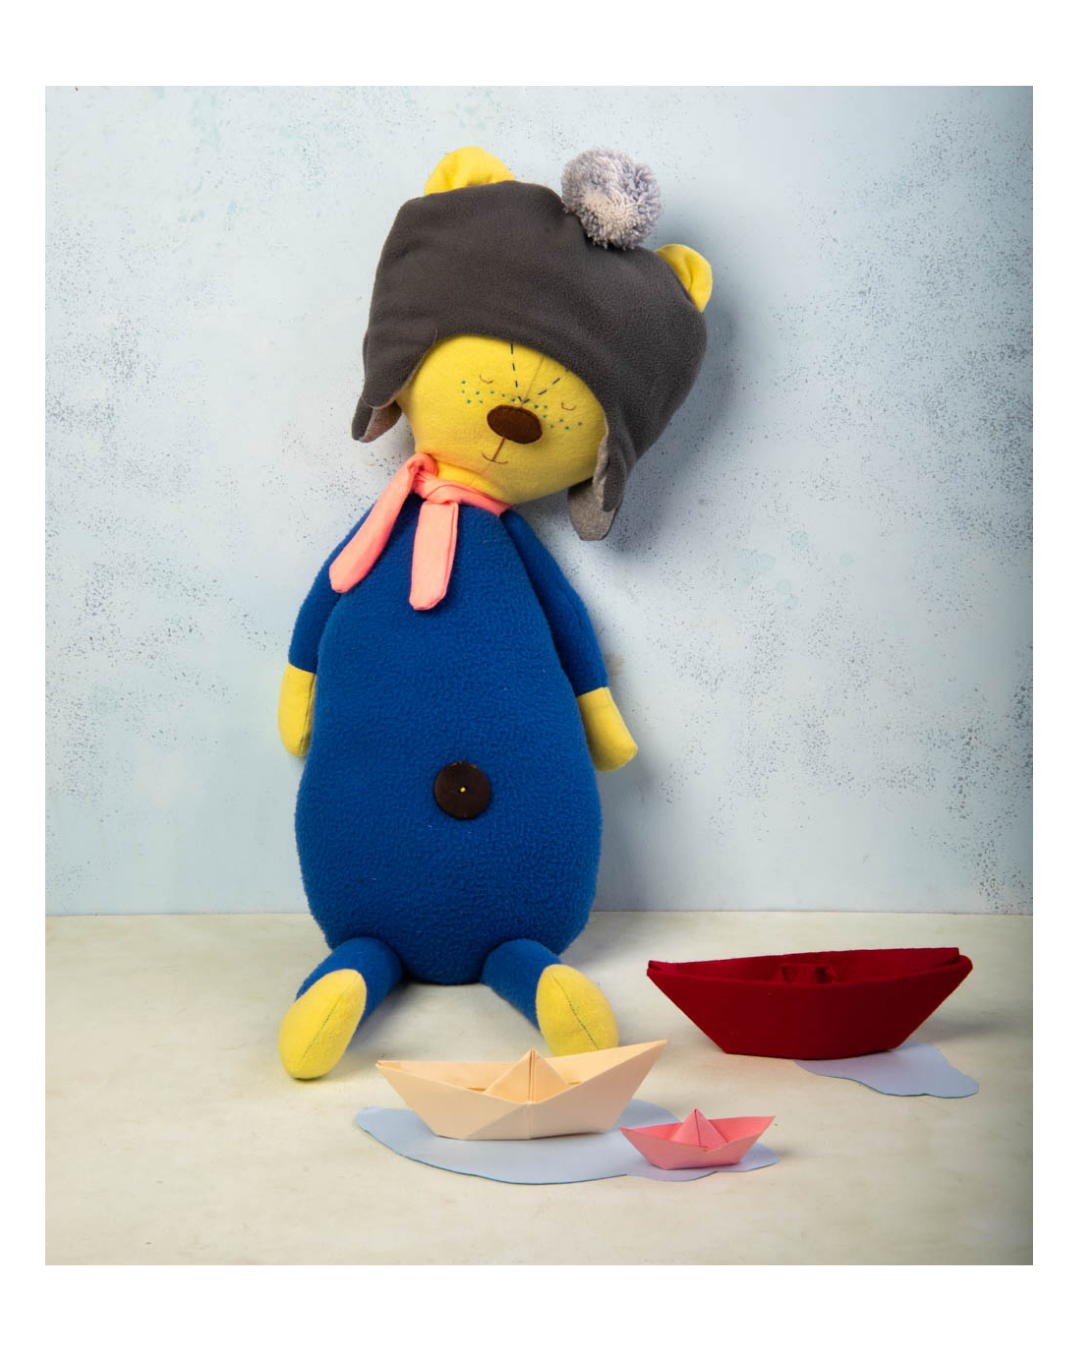 Bo the bear - Fabric doll by Pookies - Handmade stuffed toy